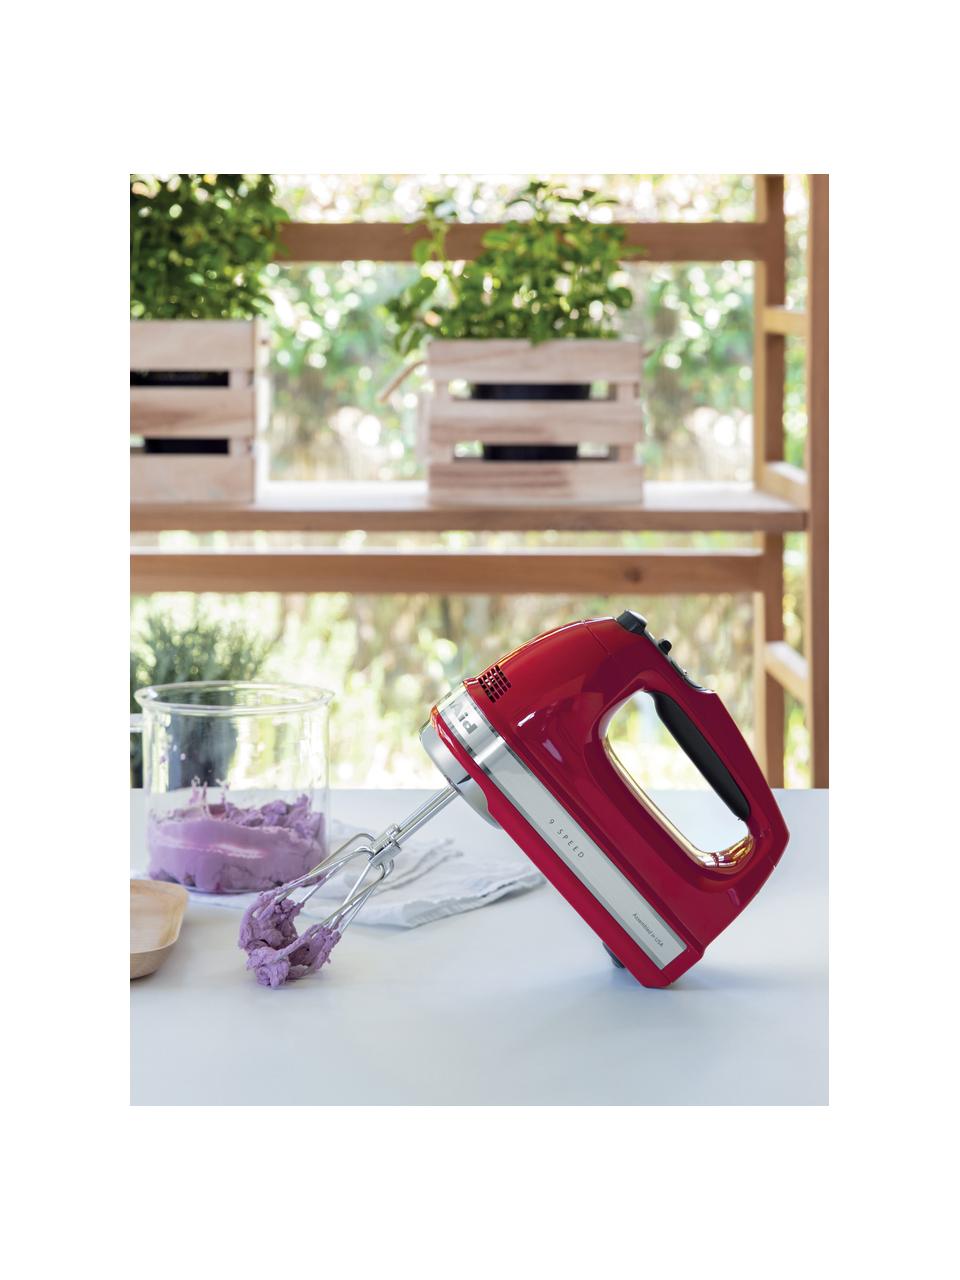 Handrührgerät KitchenAid, Gehäuse: Kunststoff, Rot, glänzend, B 15 x H 20 cm